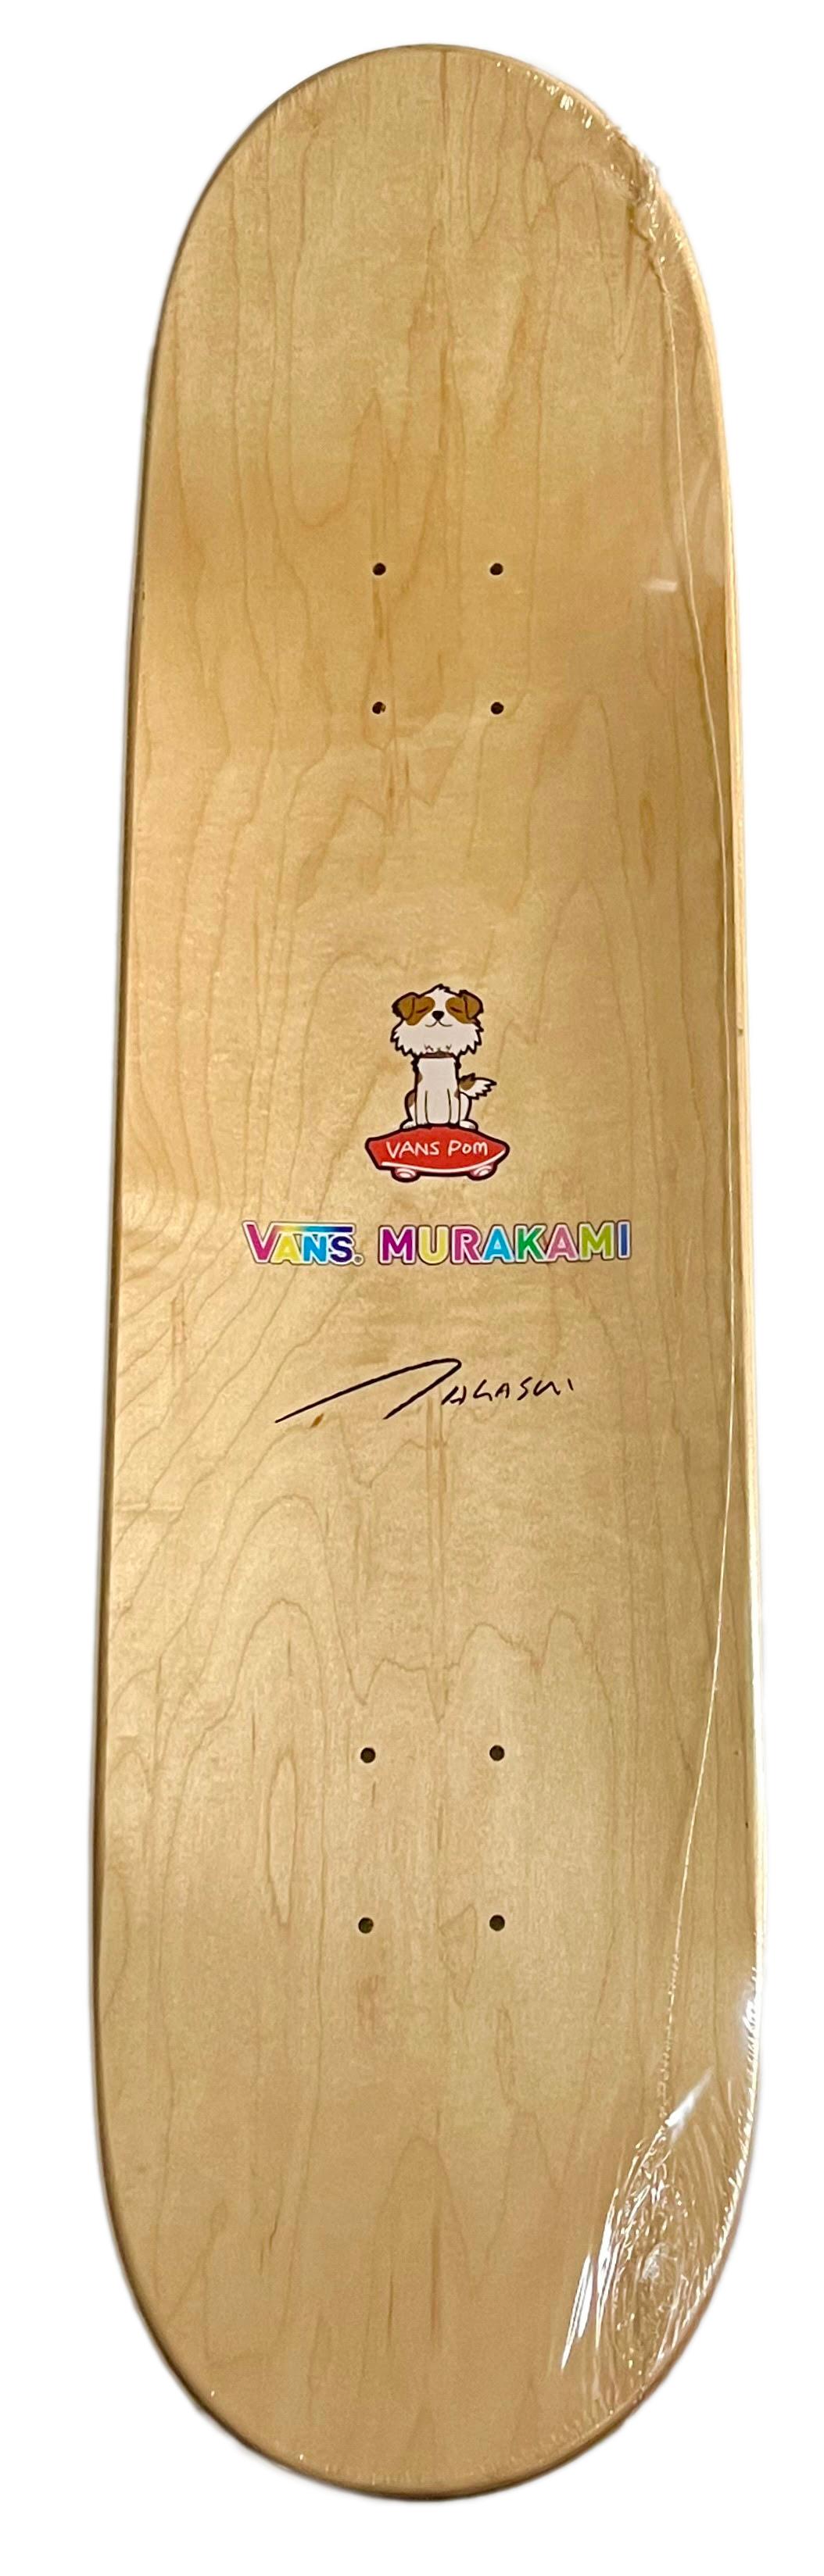 Takashi Murakami skateboard deck (Takashi Murakami skulls skate deck)  2